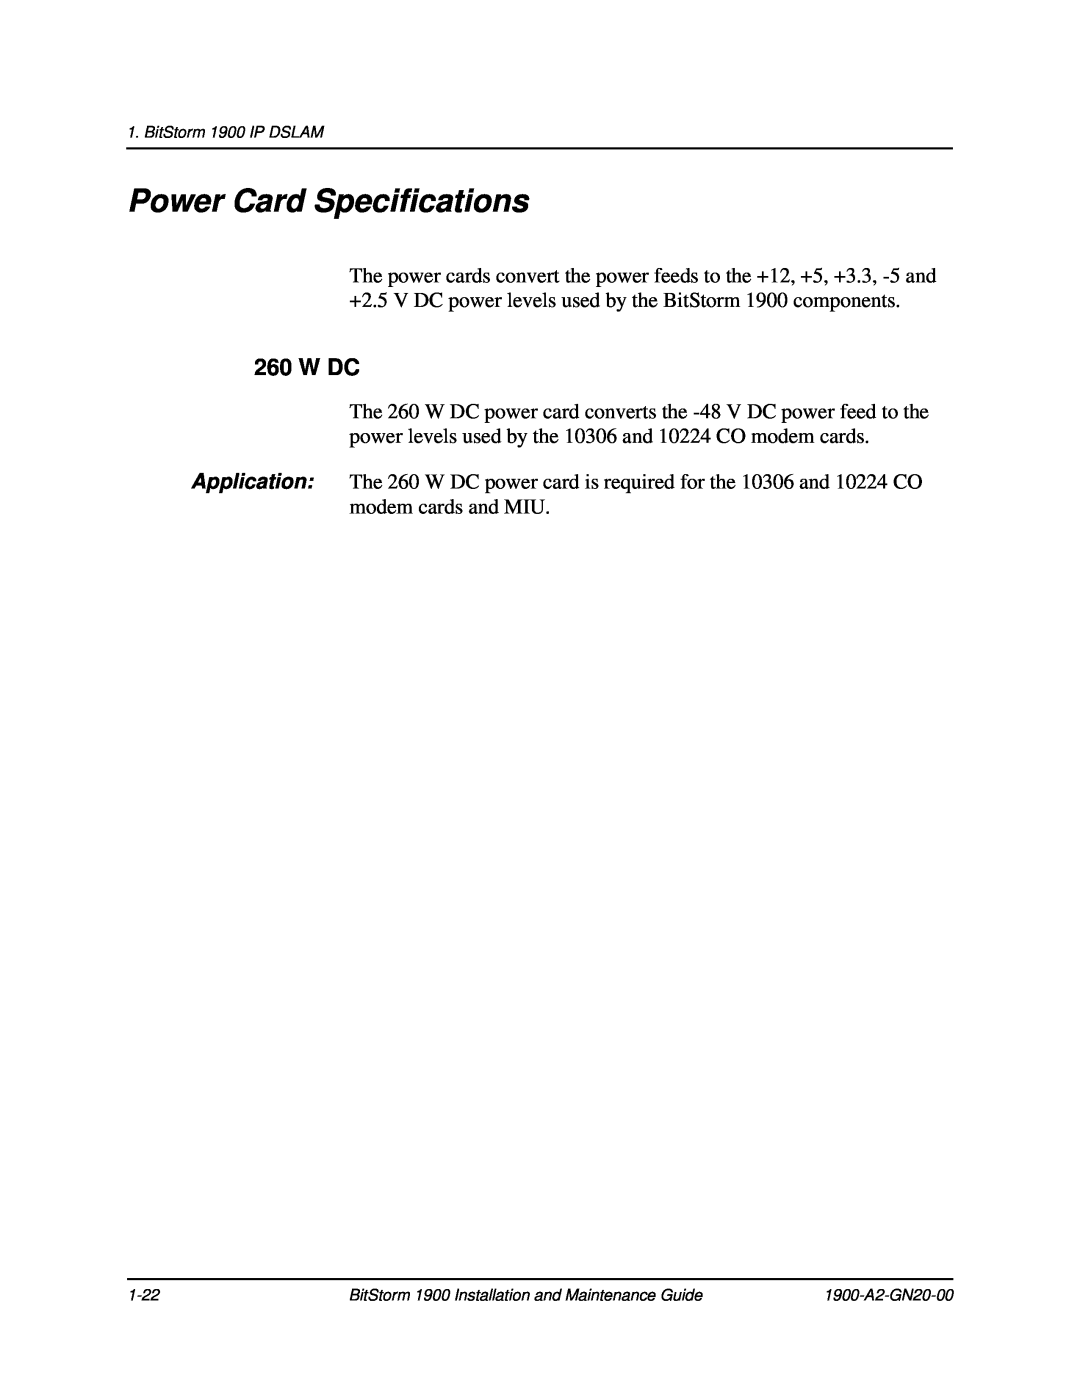 Paradyne 1900 manual Power Card Specifications, W Dc 